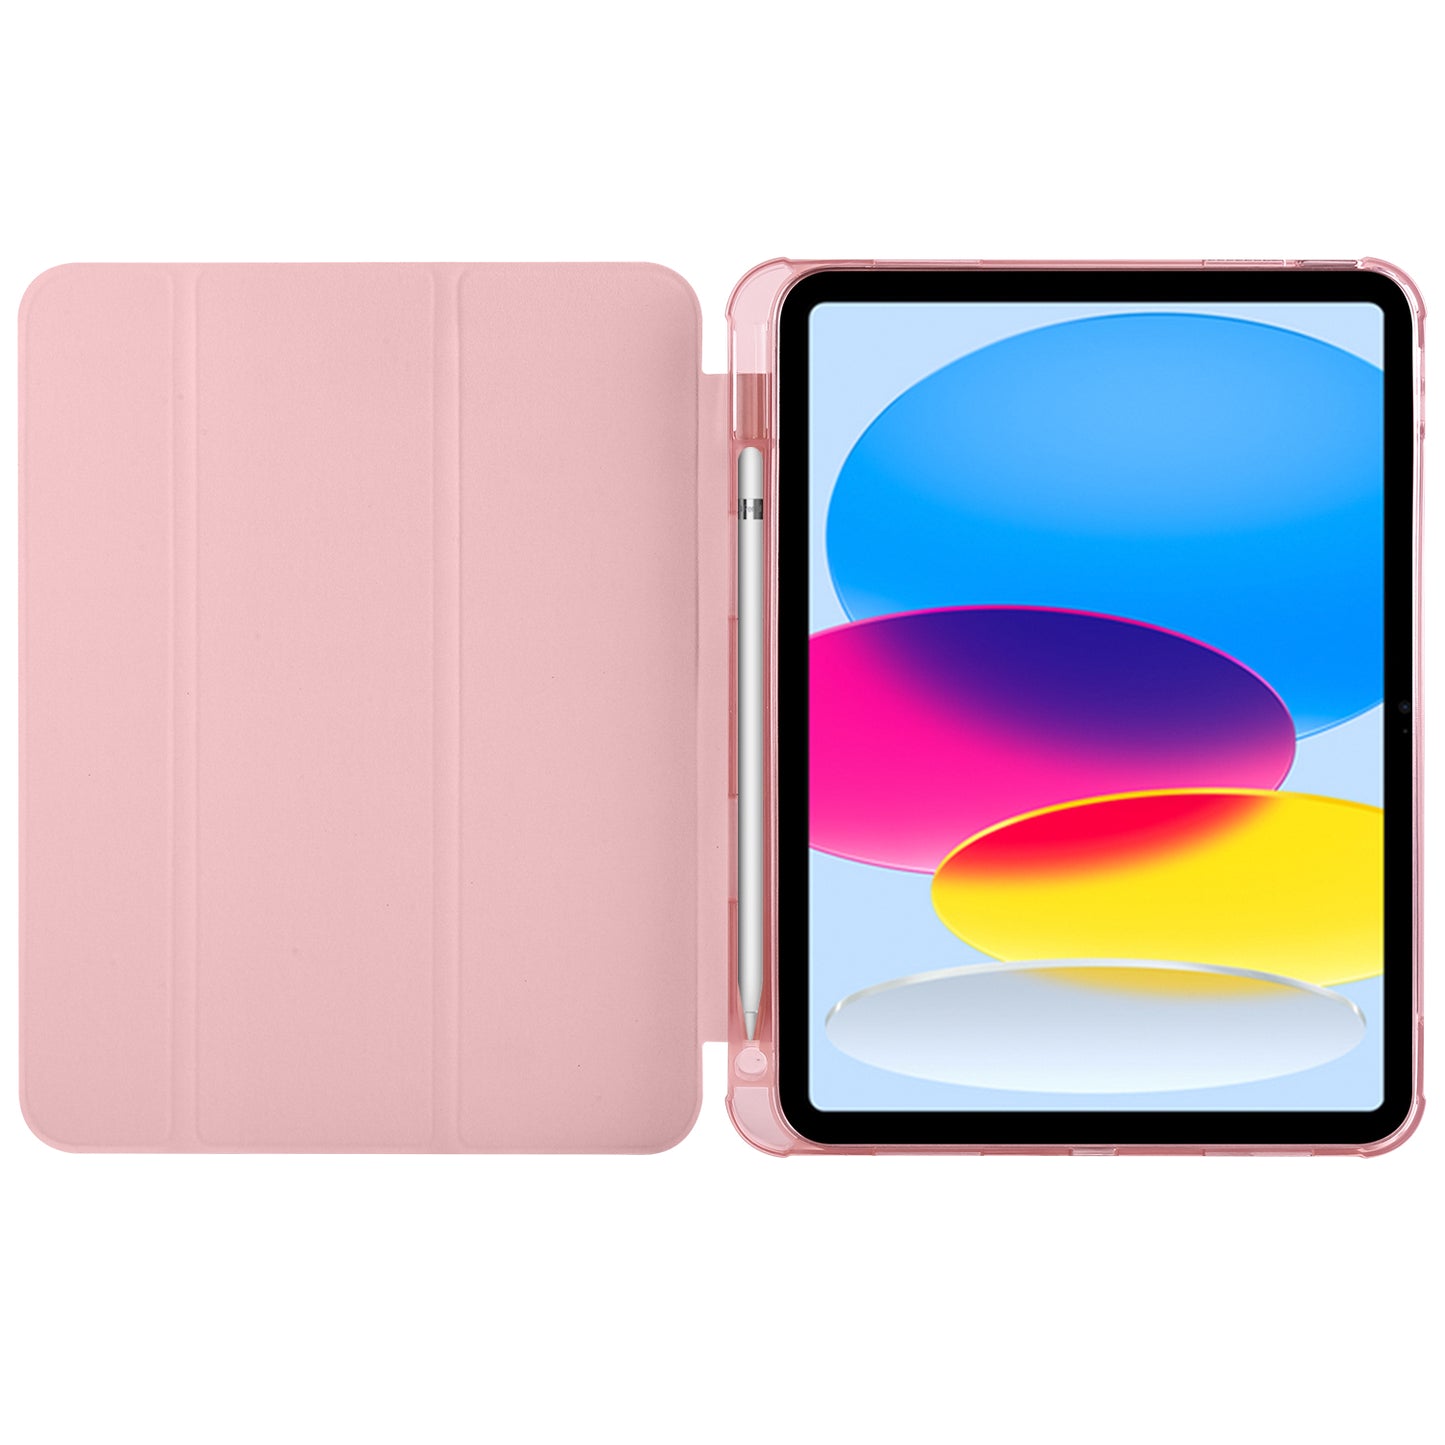 Foldable iPad Smart Case